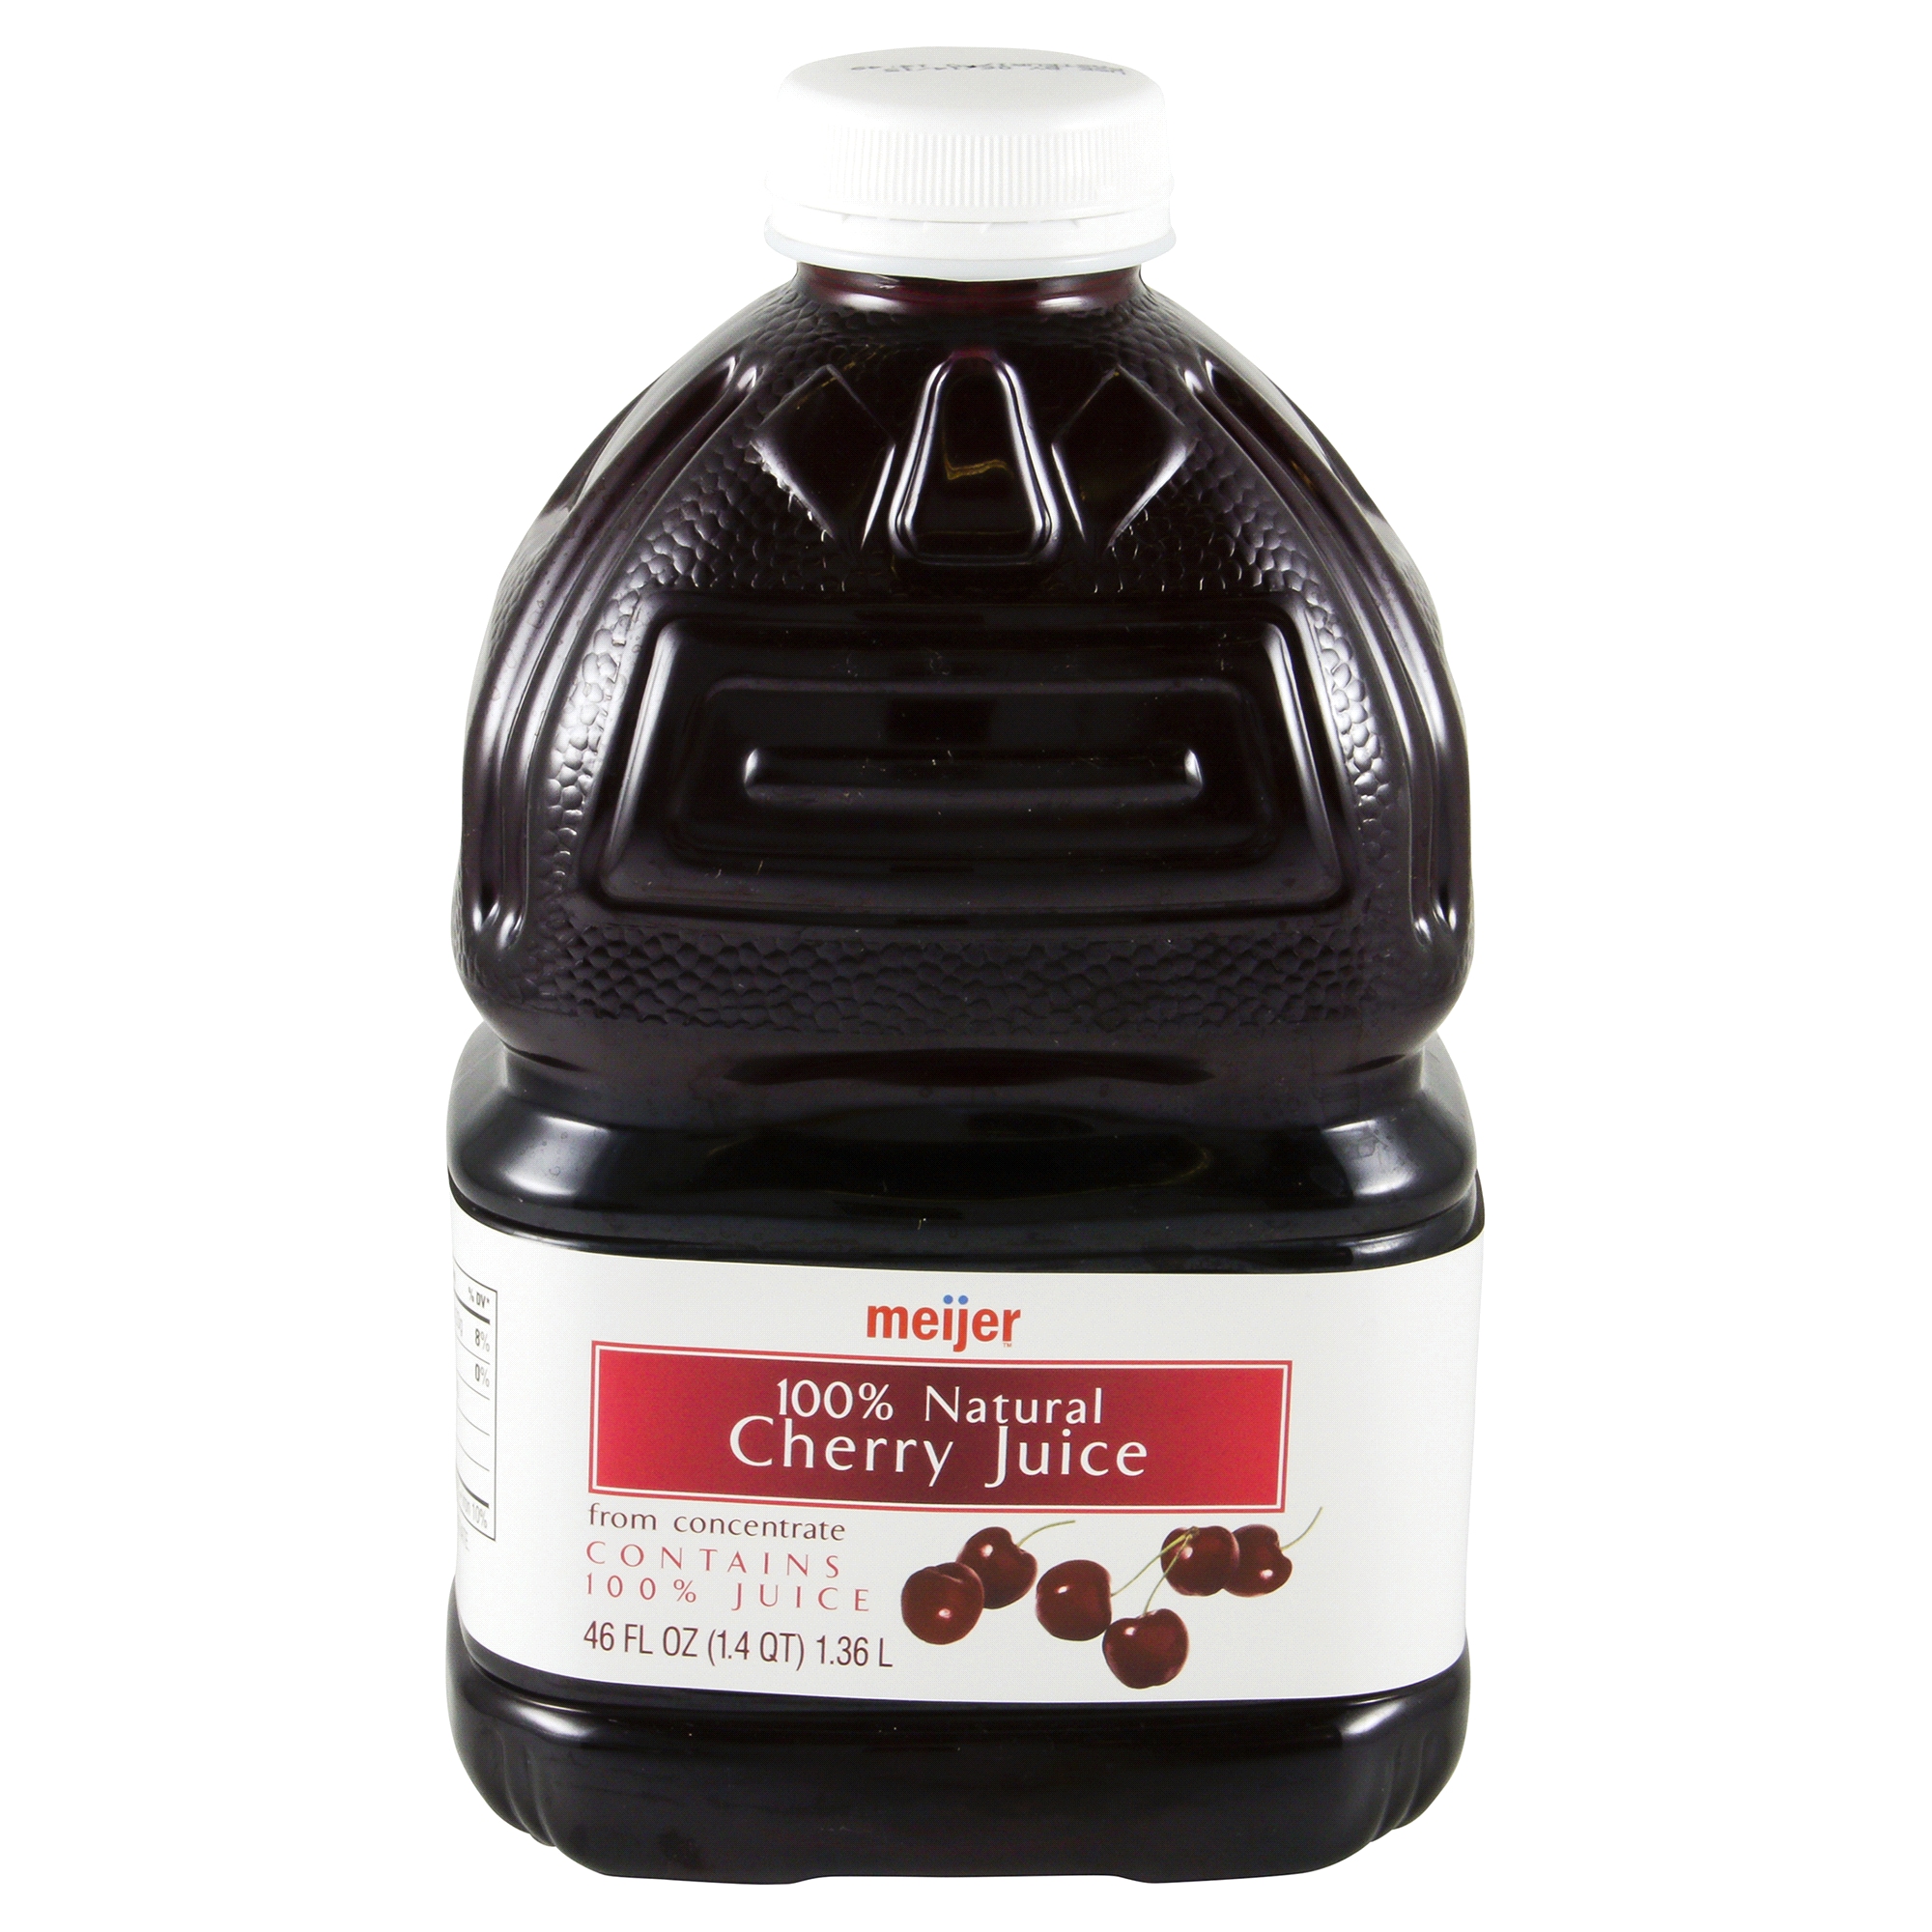 meijer cherry juice from concentrate - 46 oz | meijer